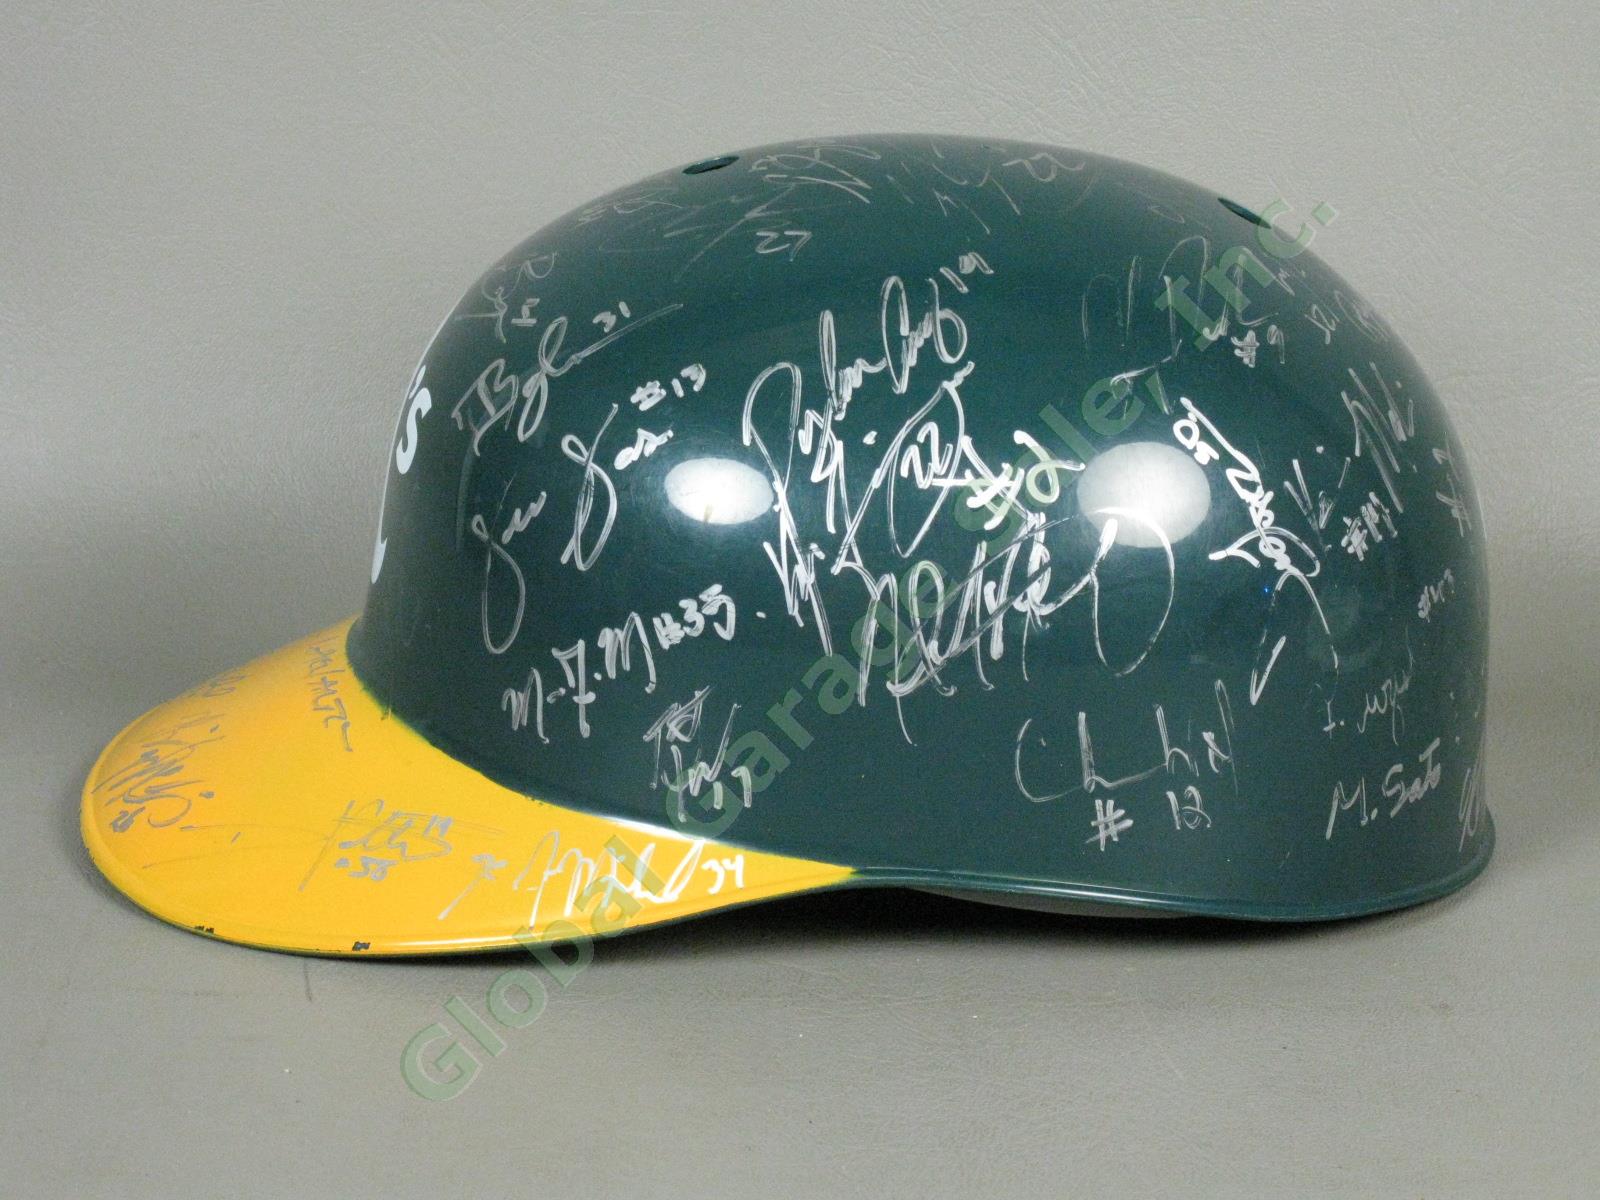 2013 Vermont Lake Monsters Team Signed Baseball Helmet NYPL Oakland Athletics NR 3